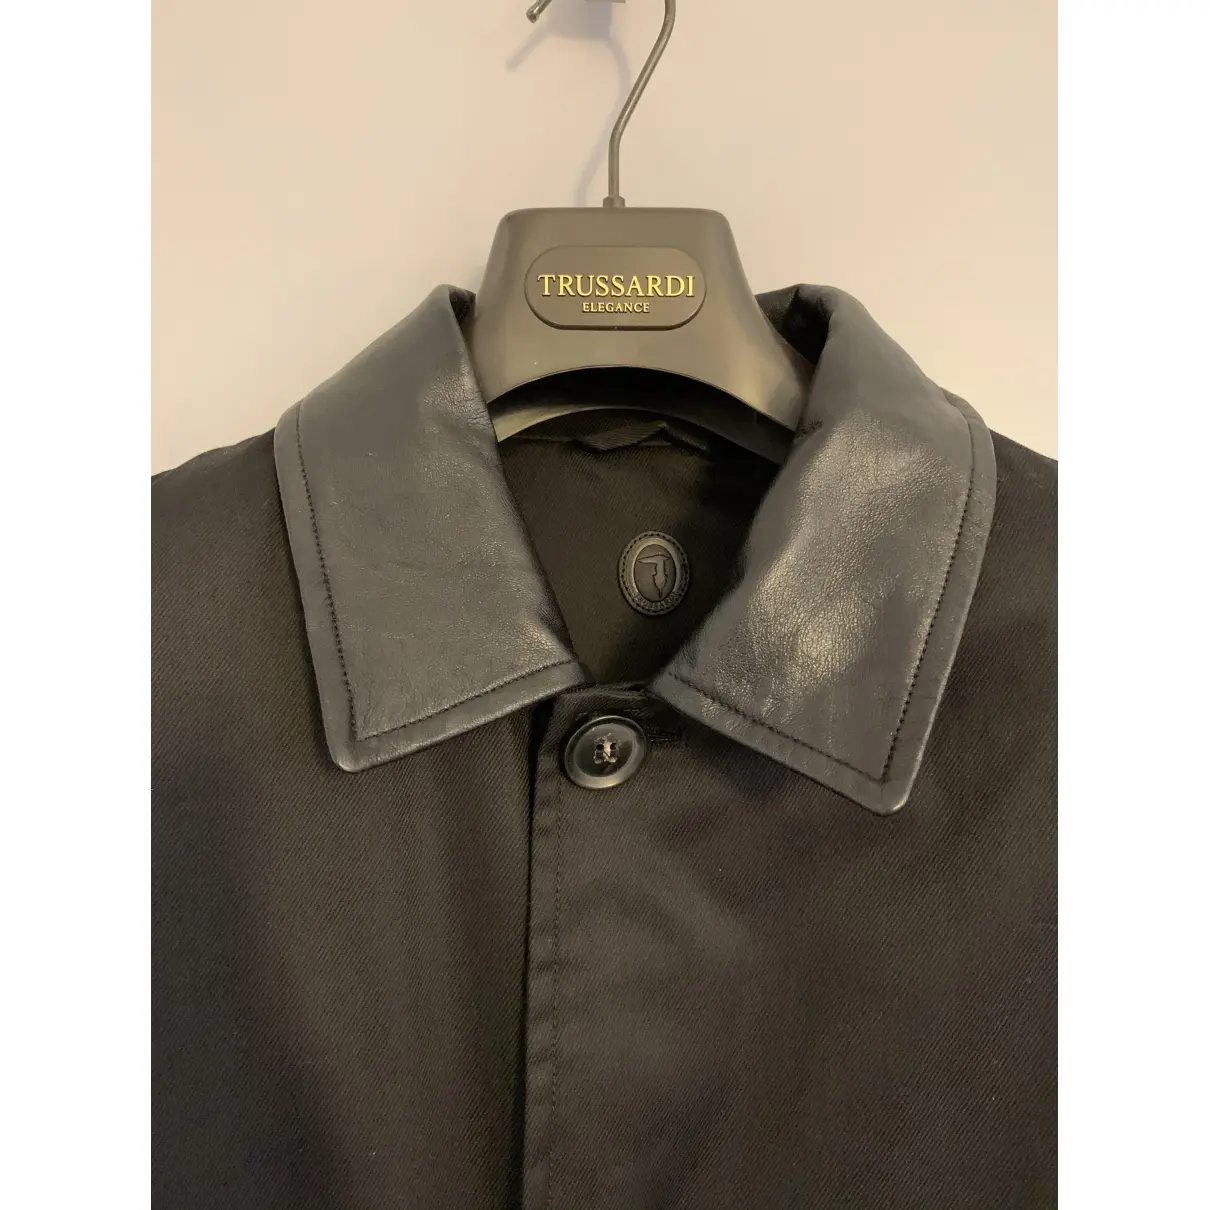 Buy Trussardi Jacket online